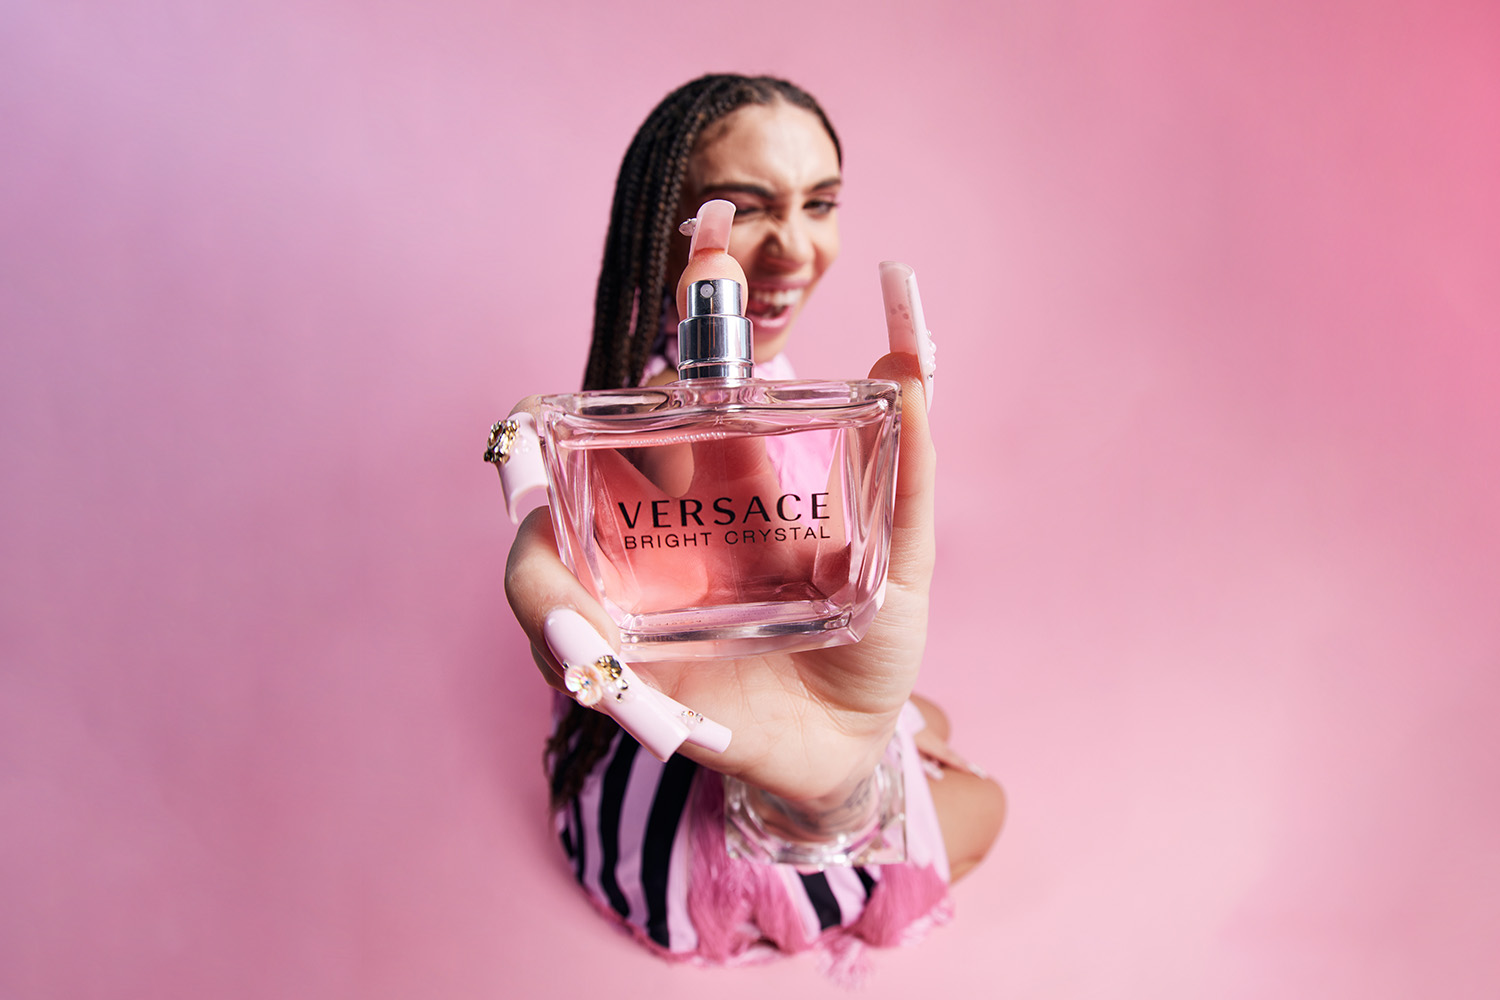 versace perfume ad